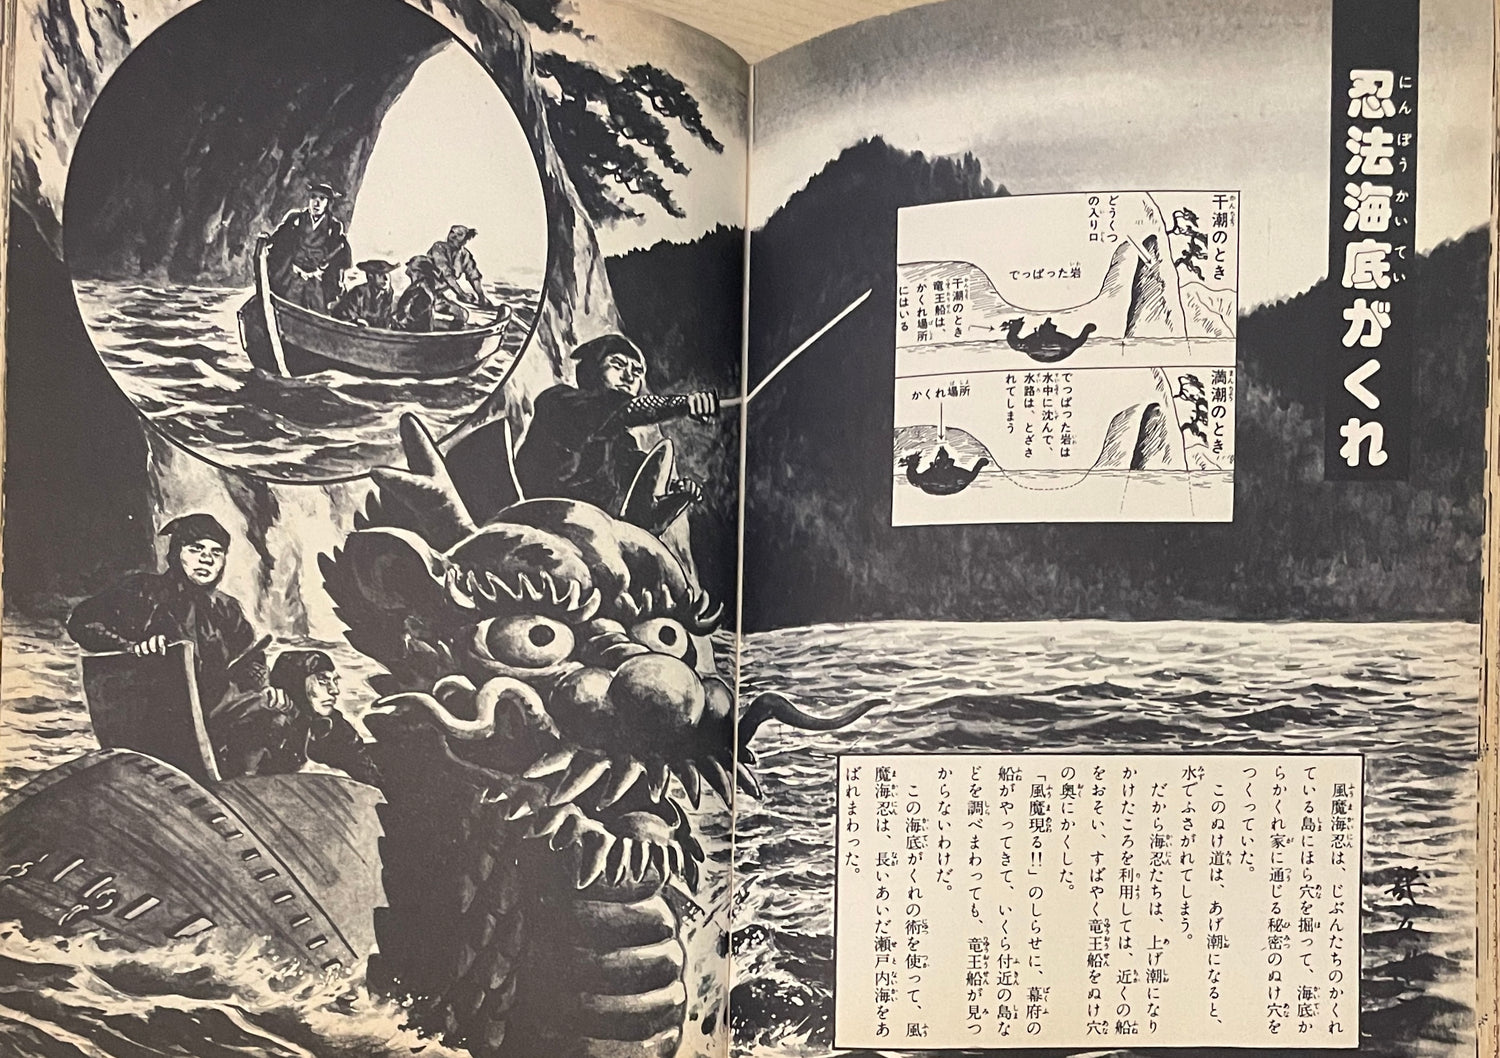 Ninja Ninpo Pictorial Full Illustration Book by Masaaki Hatsumi (Hardcover) (Preowned)